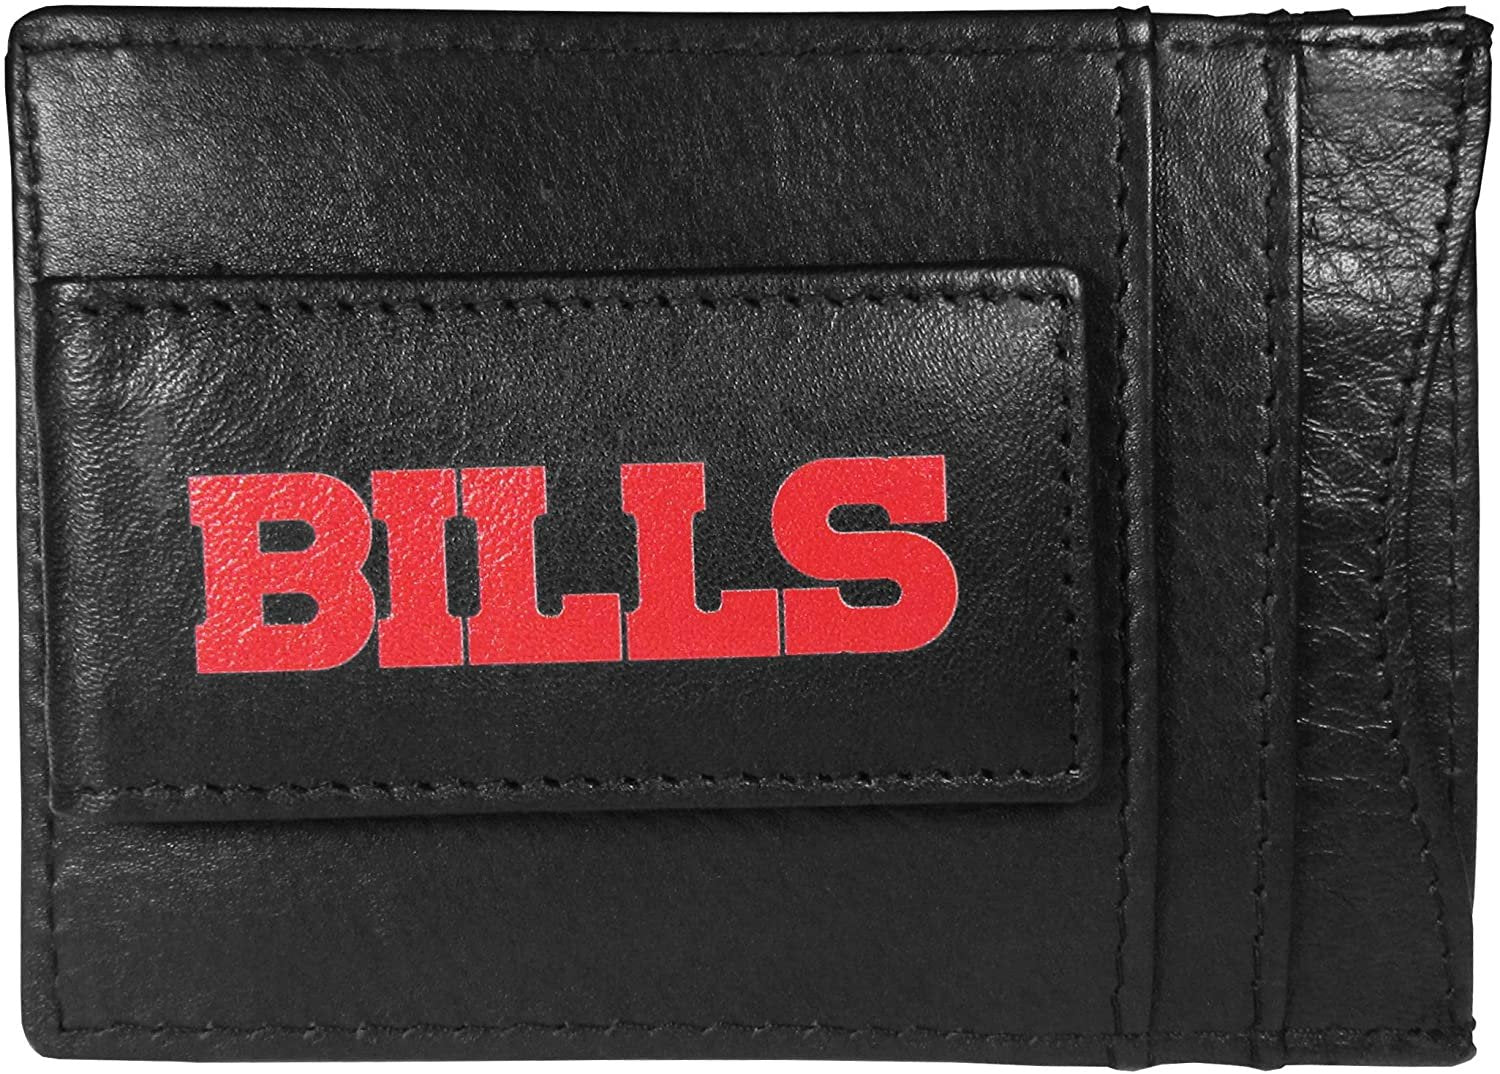 Buffalo Bills Black Leather Wallet, Front Pocket Magnetic Money Clip, Printed Logo